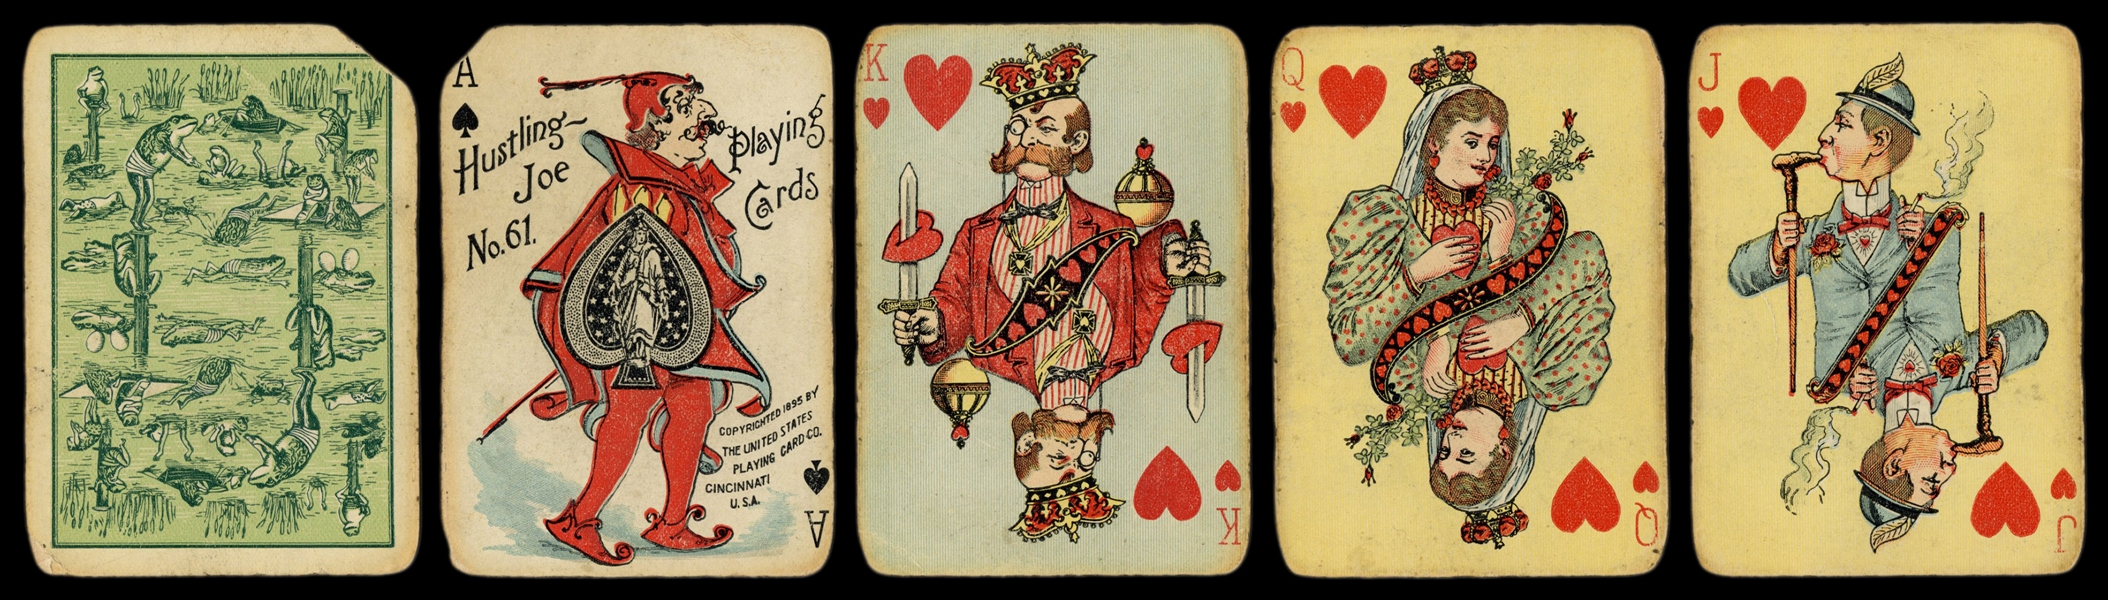  Hustling Joe No. 61 Playing Cards. Cincinnati: USPC, 1895. ...